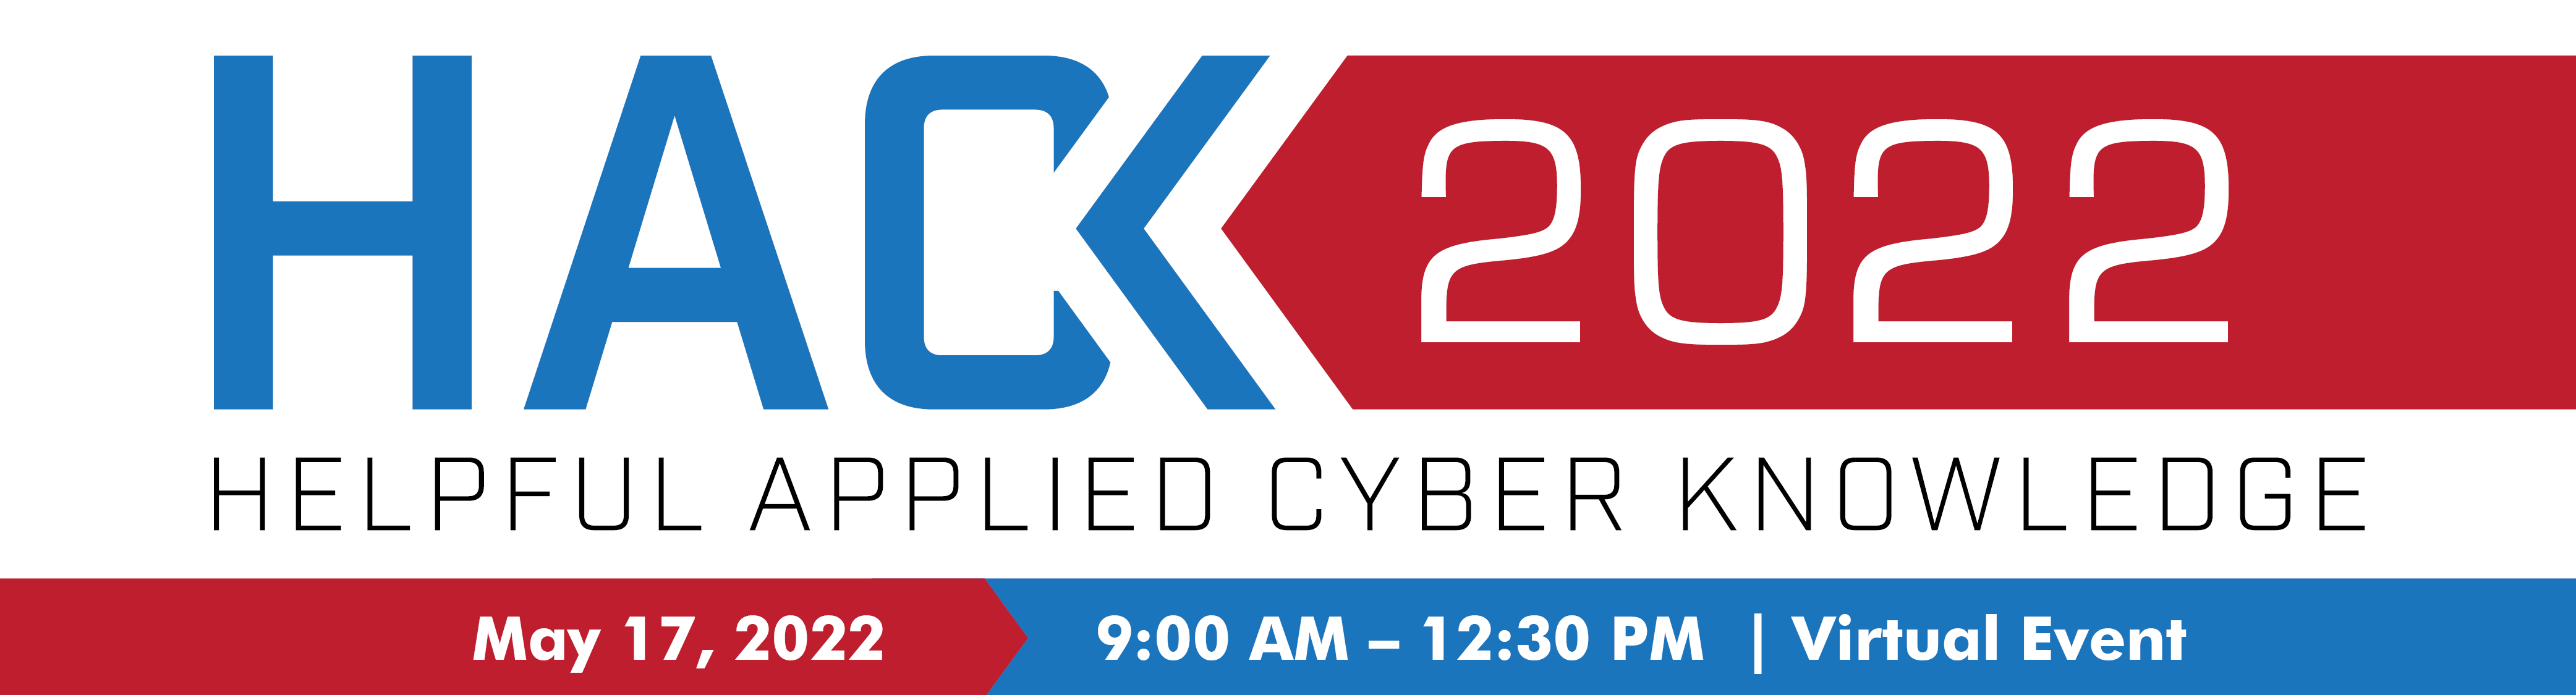 NRC HACK Cybersecurity Seminar & Expo